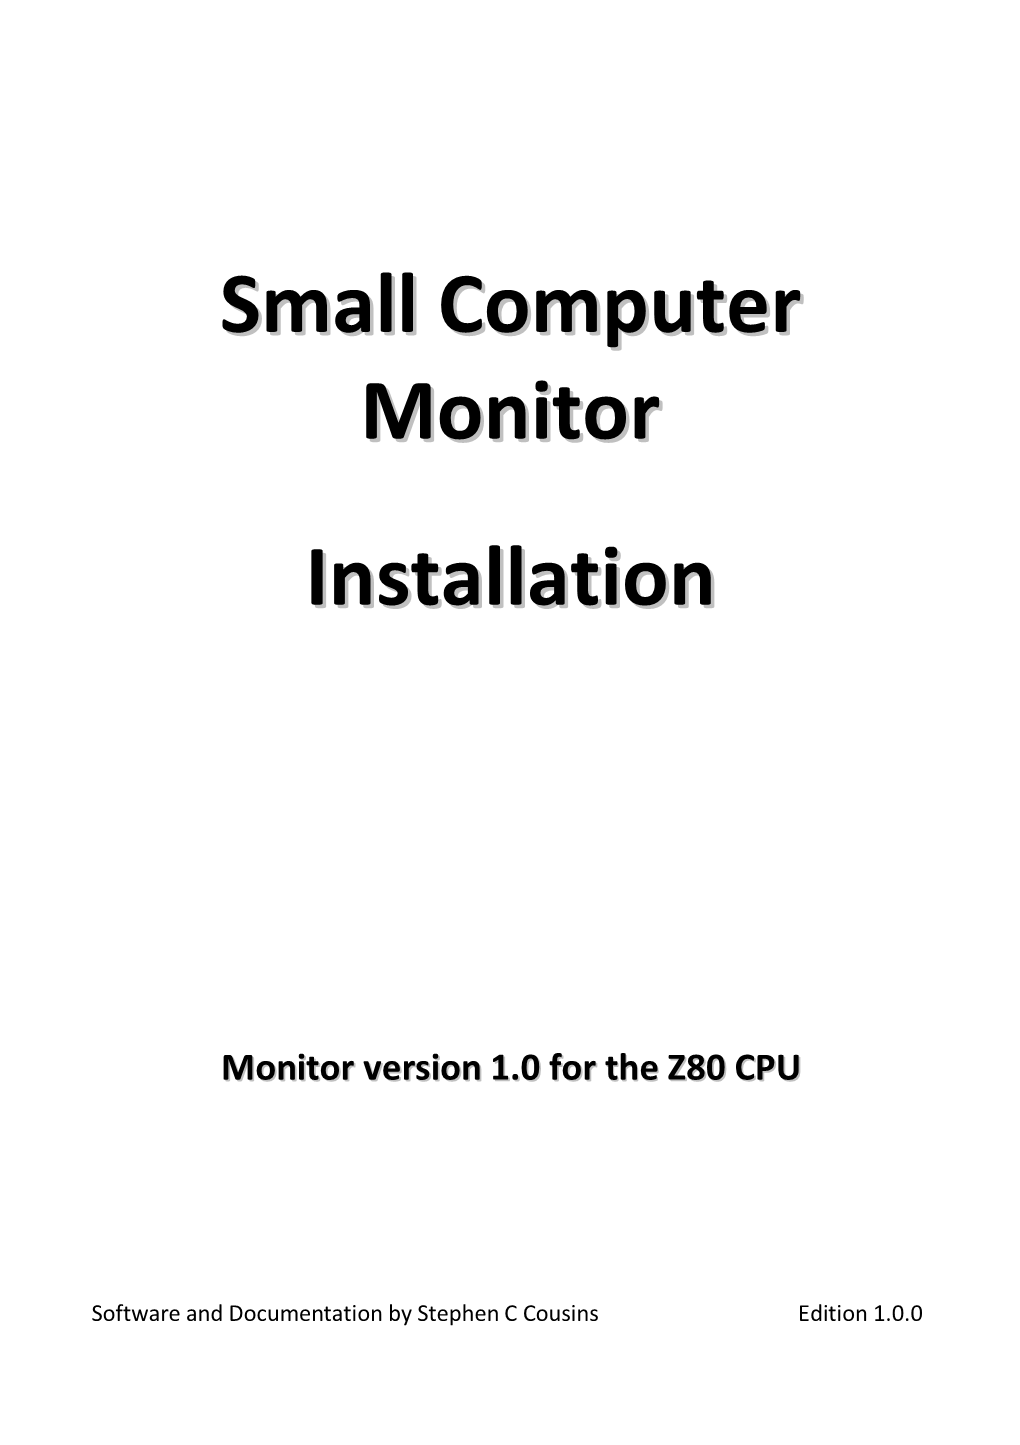 Small Computer Monitor Installation